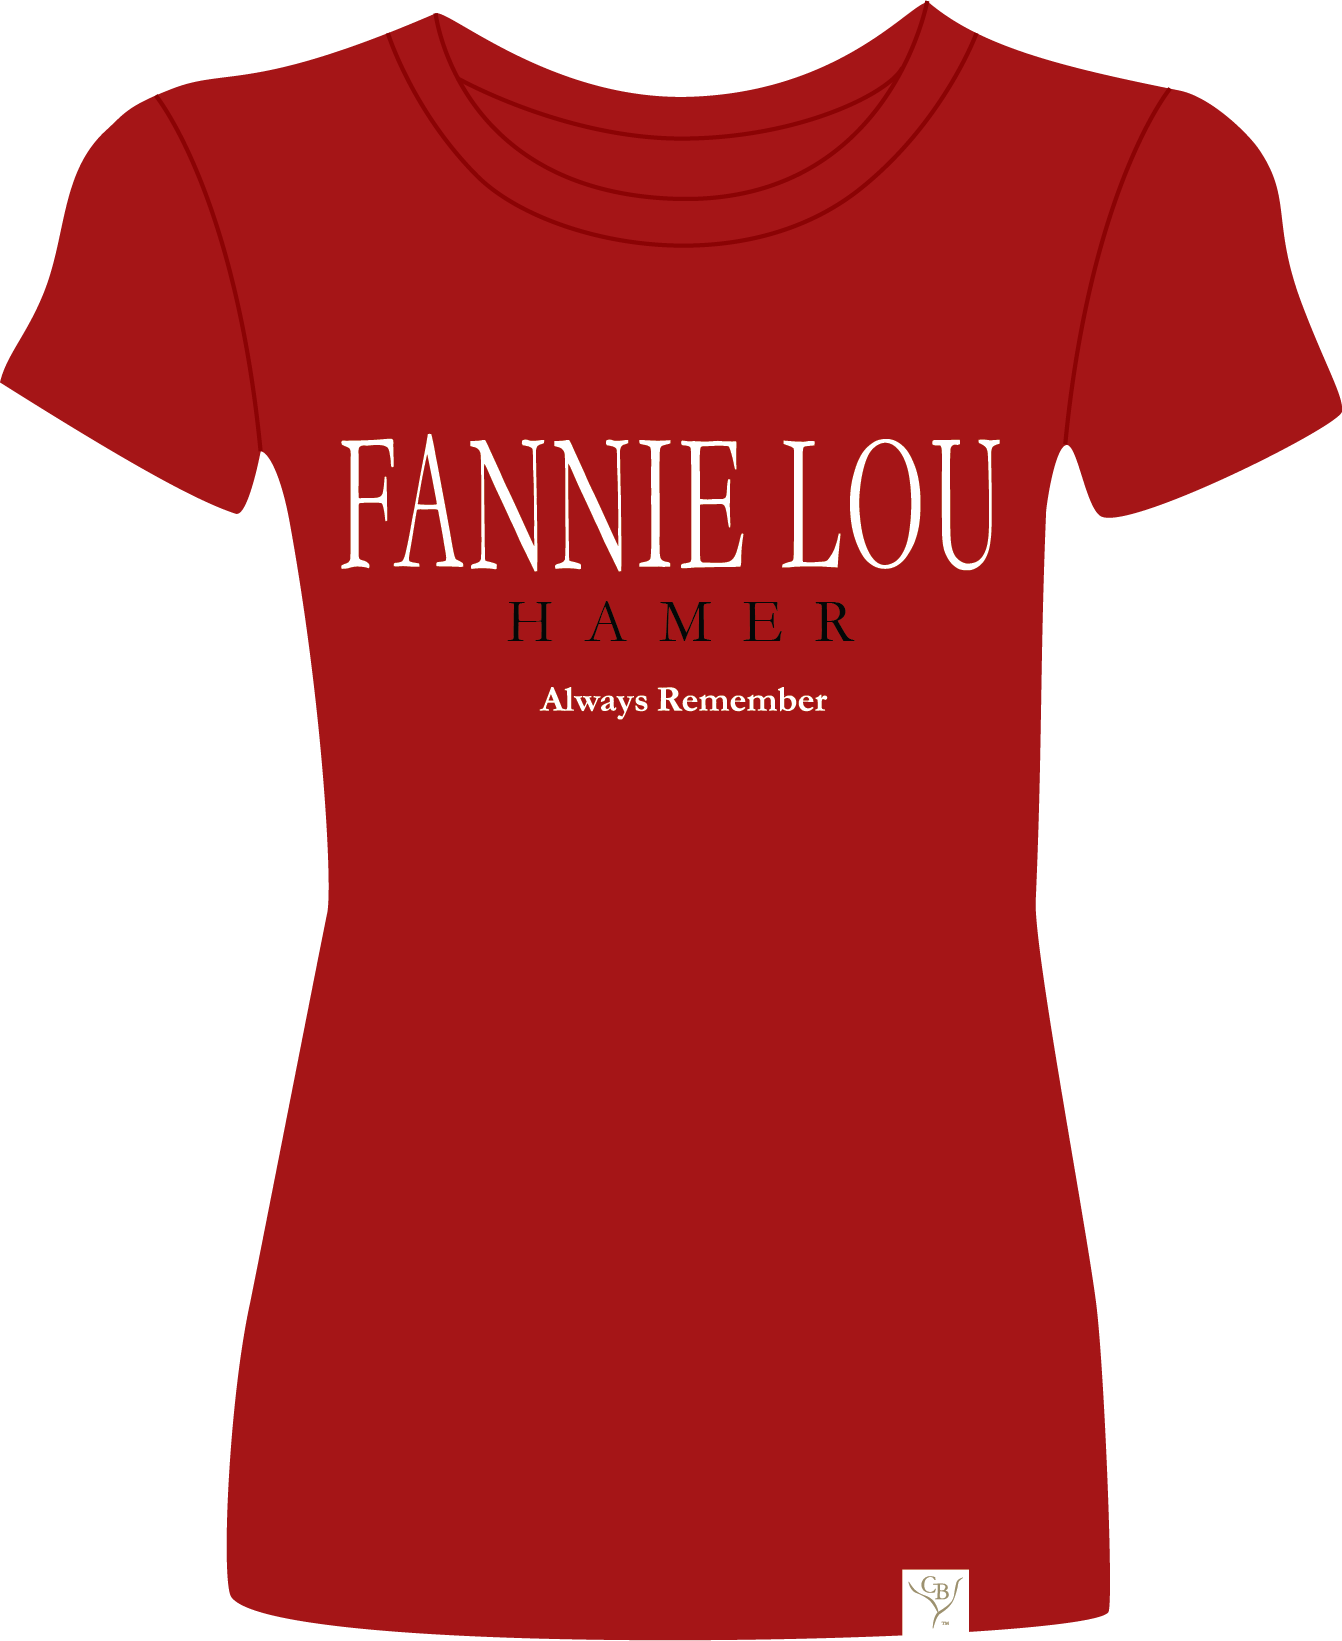 The Fannie Lou 9